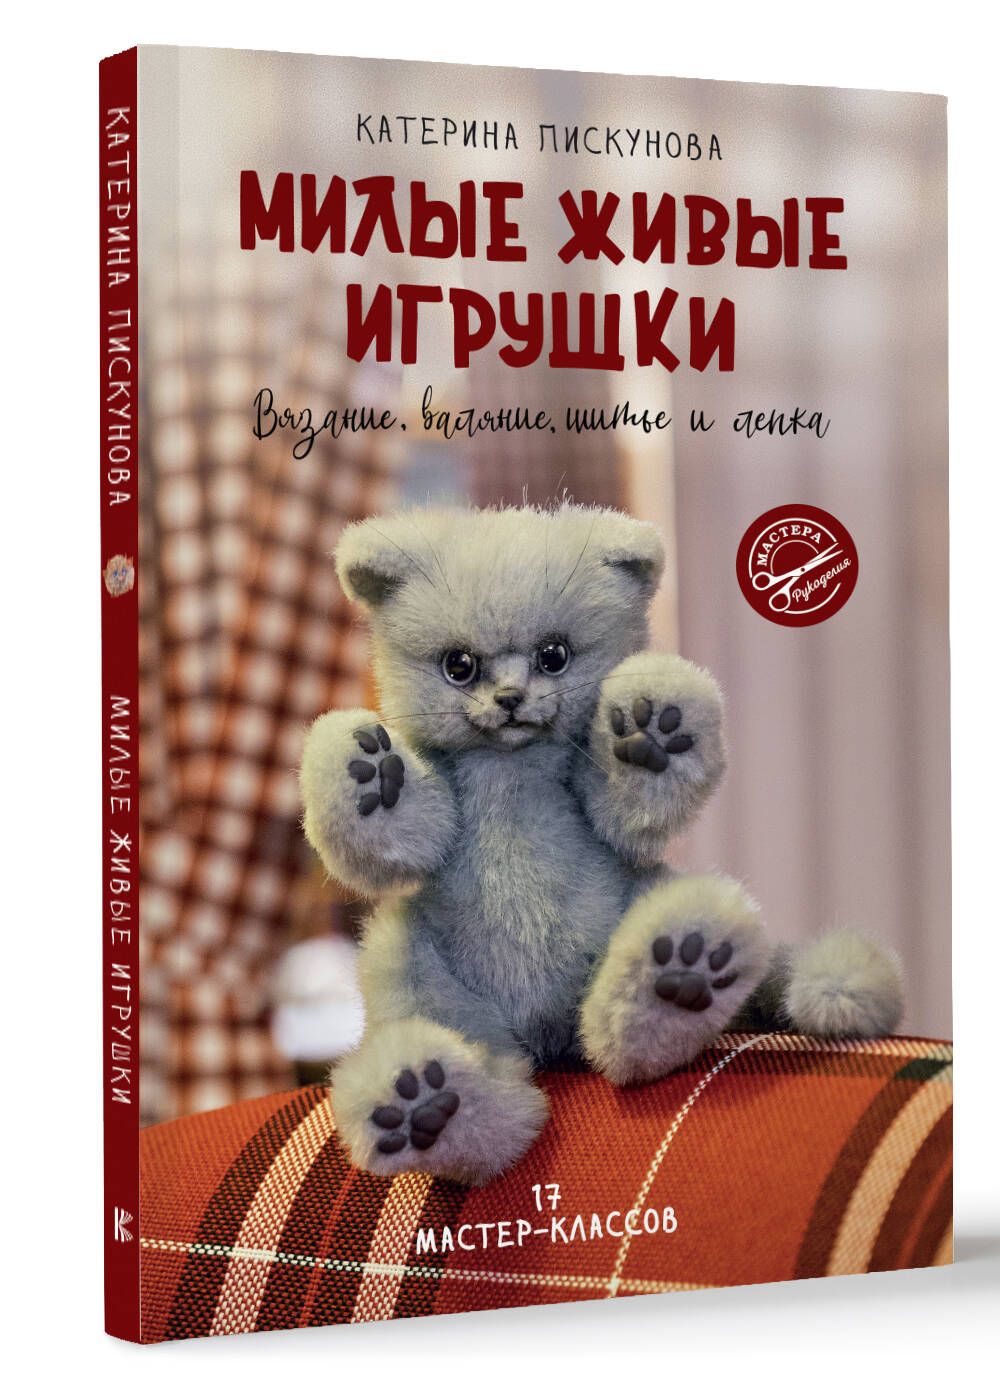 Яна Волкова: Детские куклы и обереги (книга)